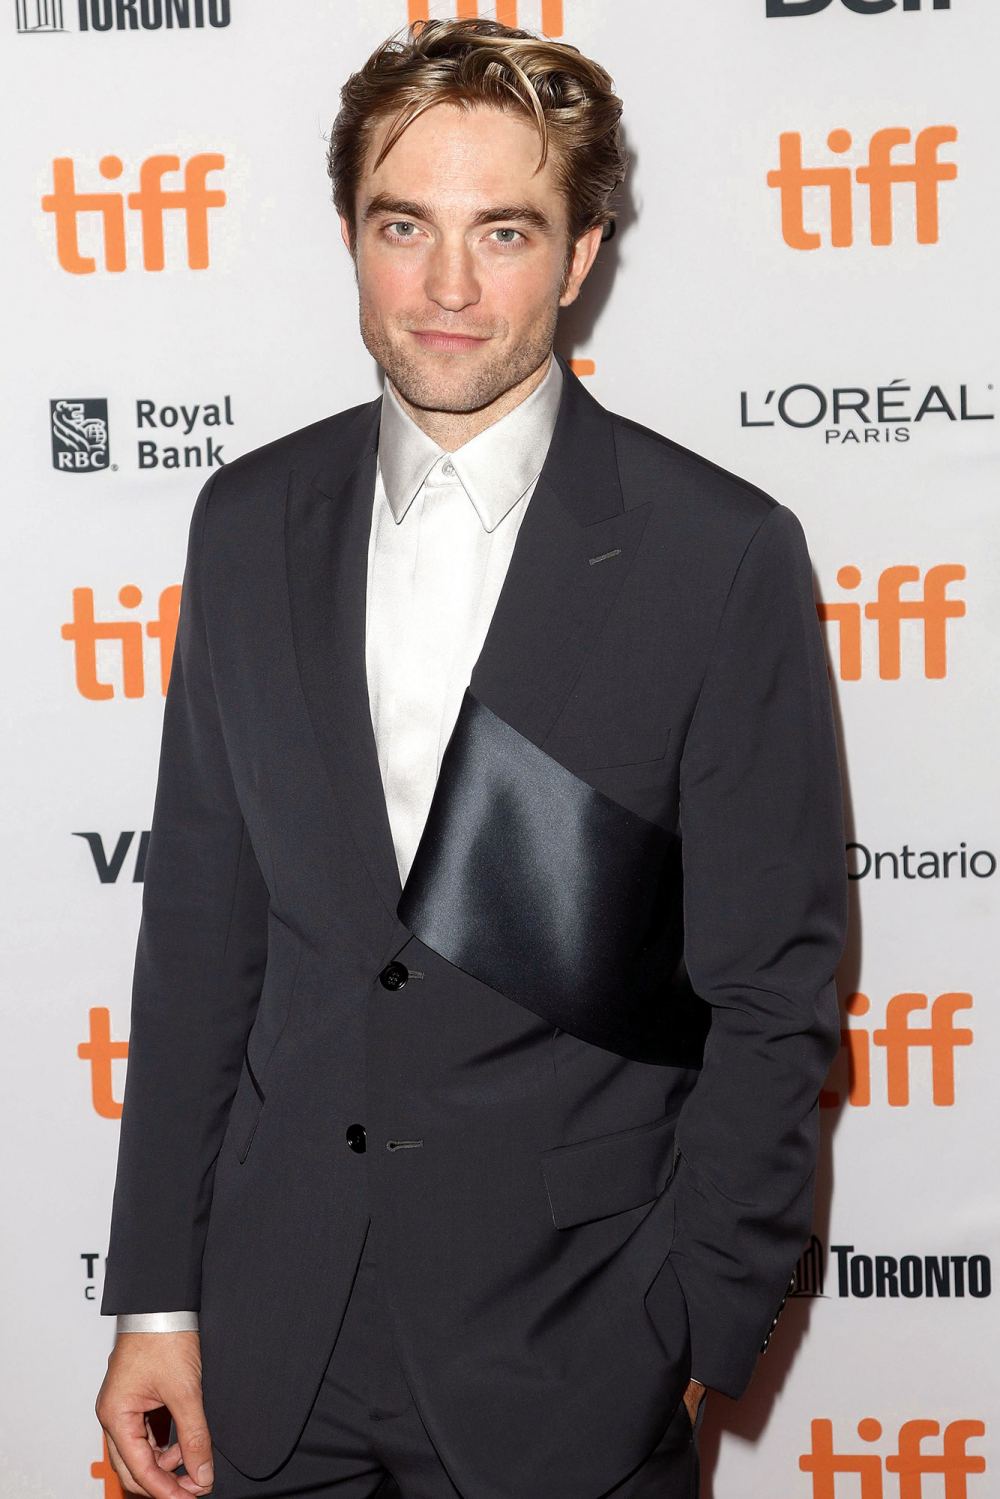 Robert Pattinson Batman Resumes Shoot After Reported COVID-19 Battle